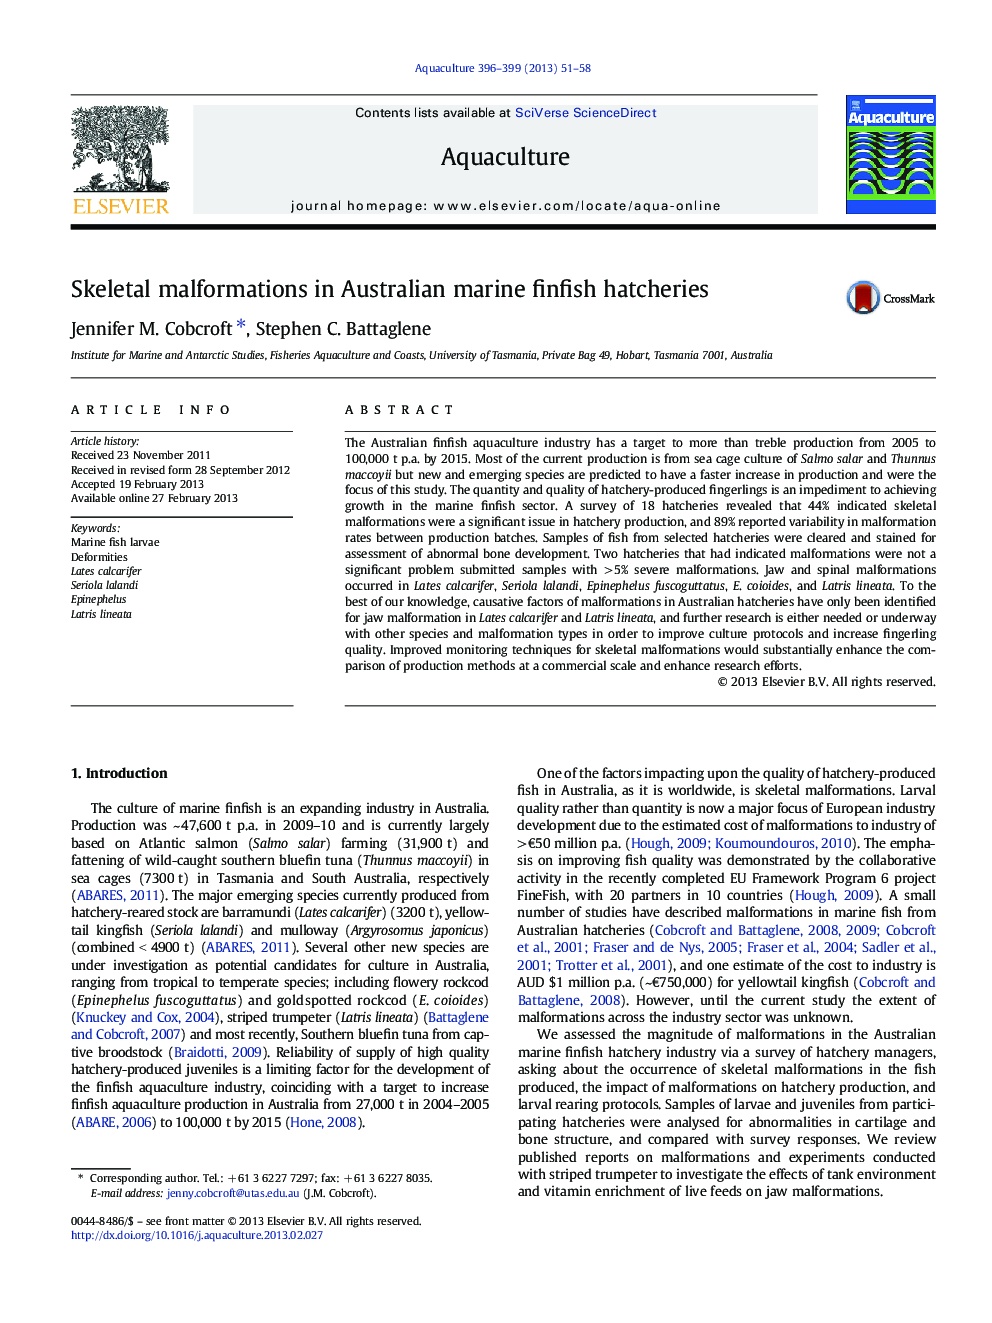 Skeletal malformations in Australian marine finfish hatcheries